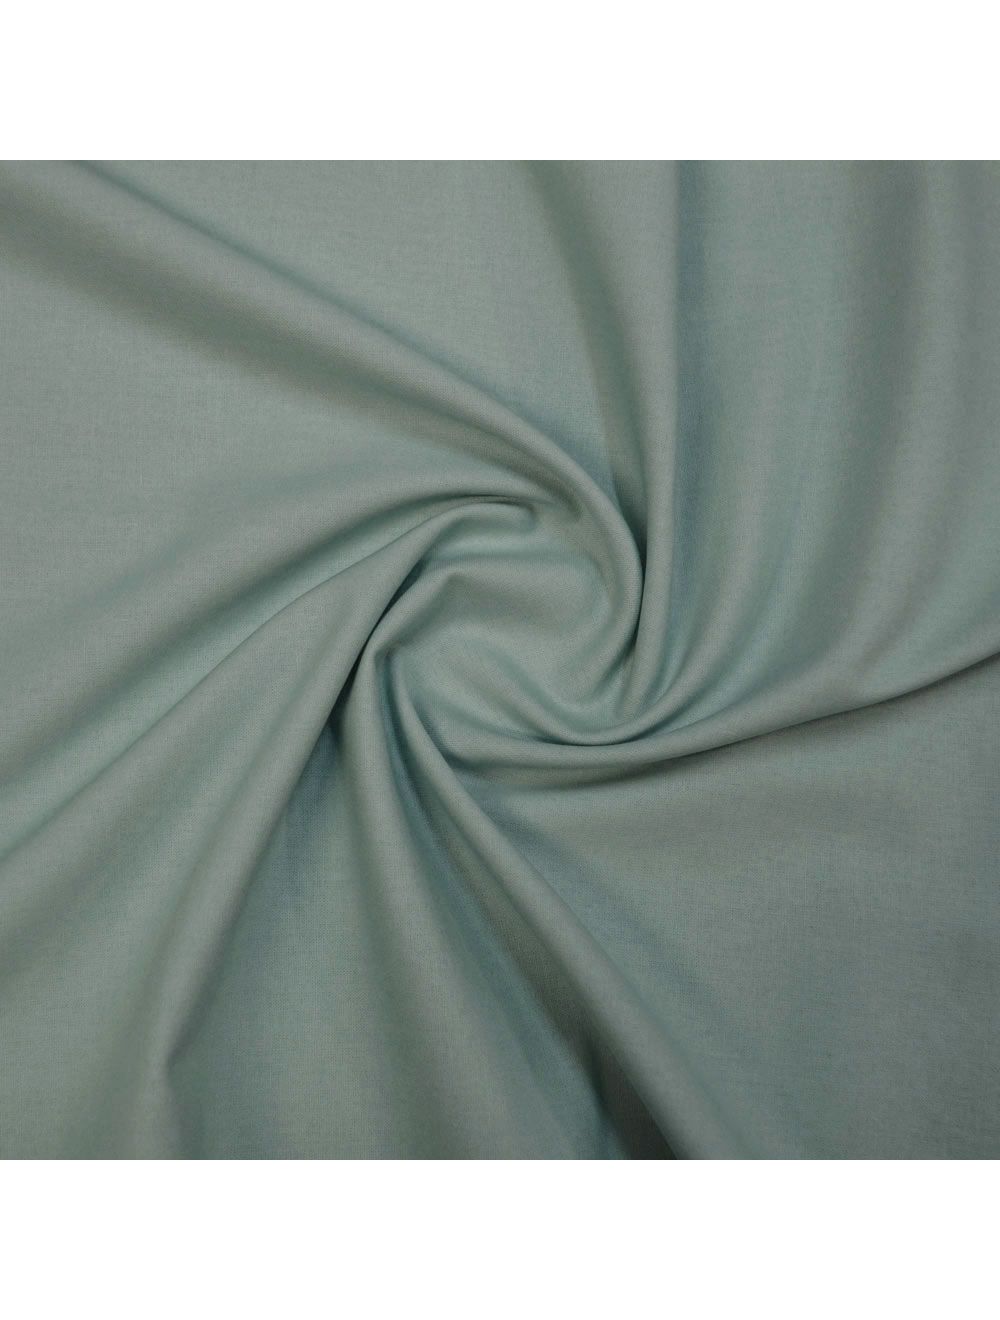 Aqua Craft Cotton Plain Fabric | Cotton Fabric | Calico Laine